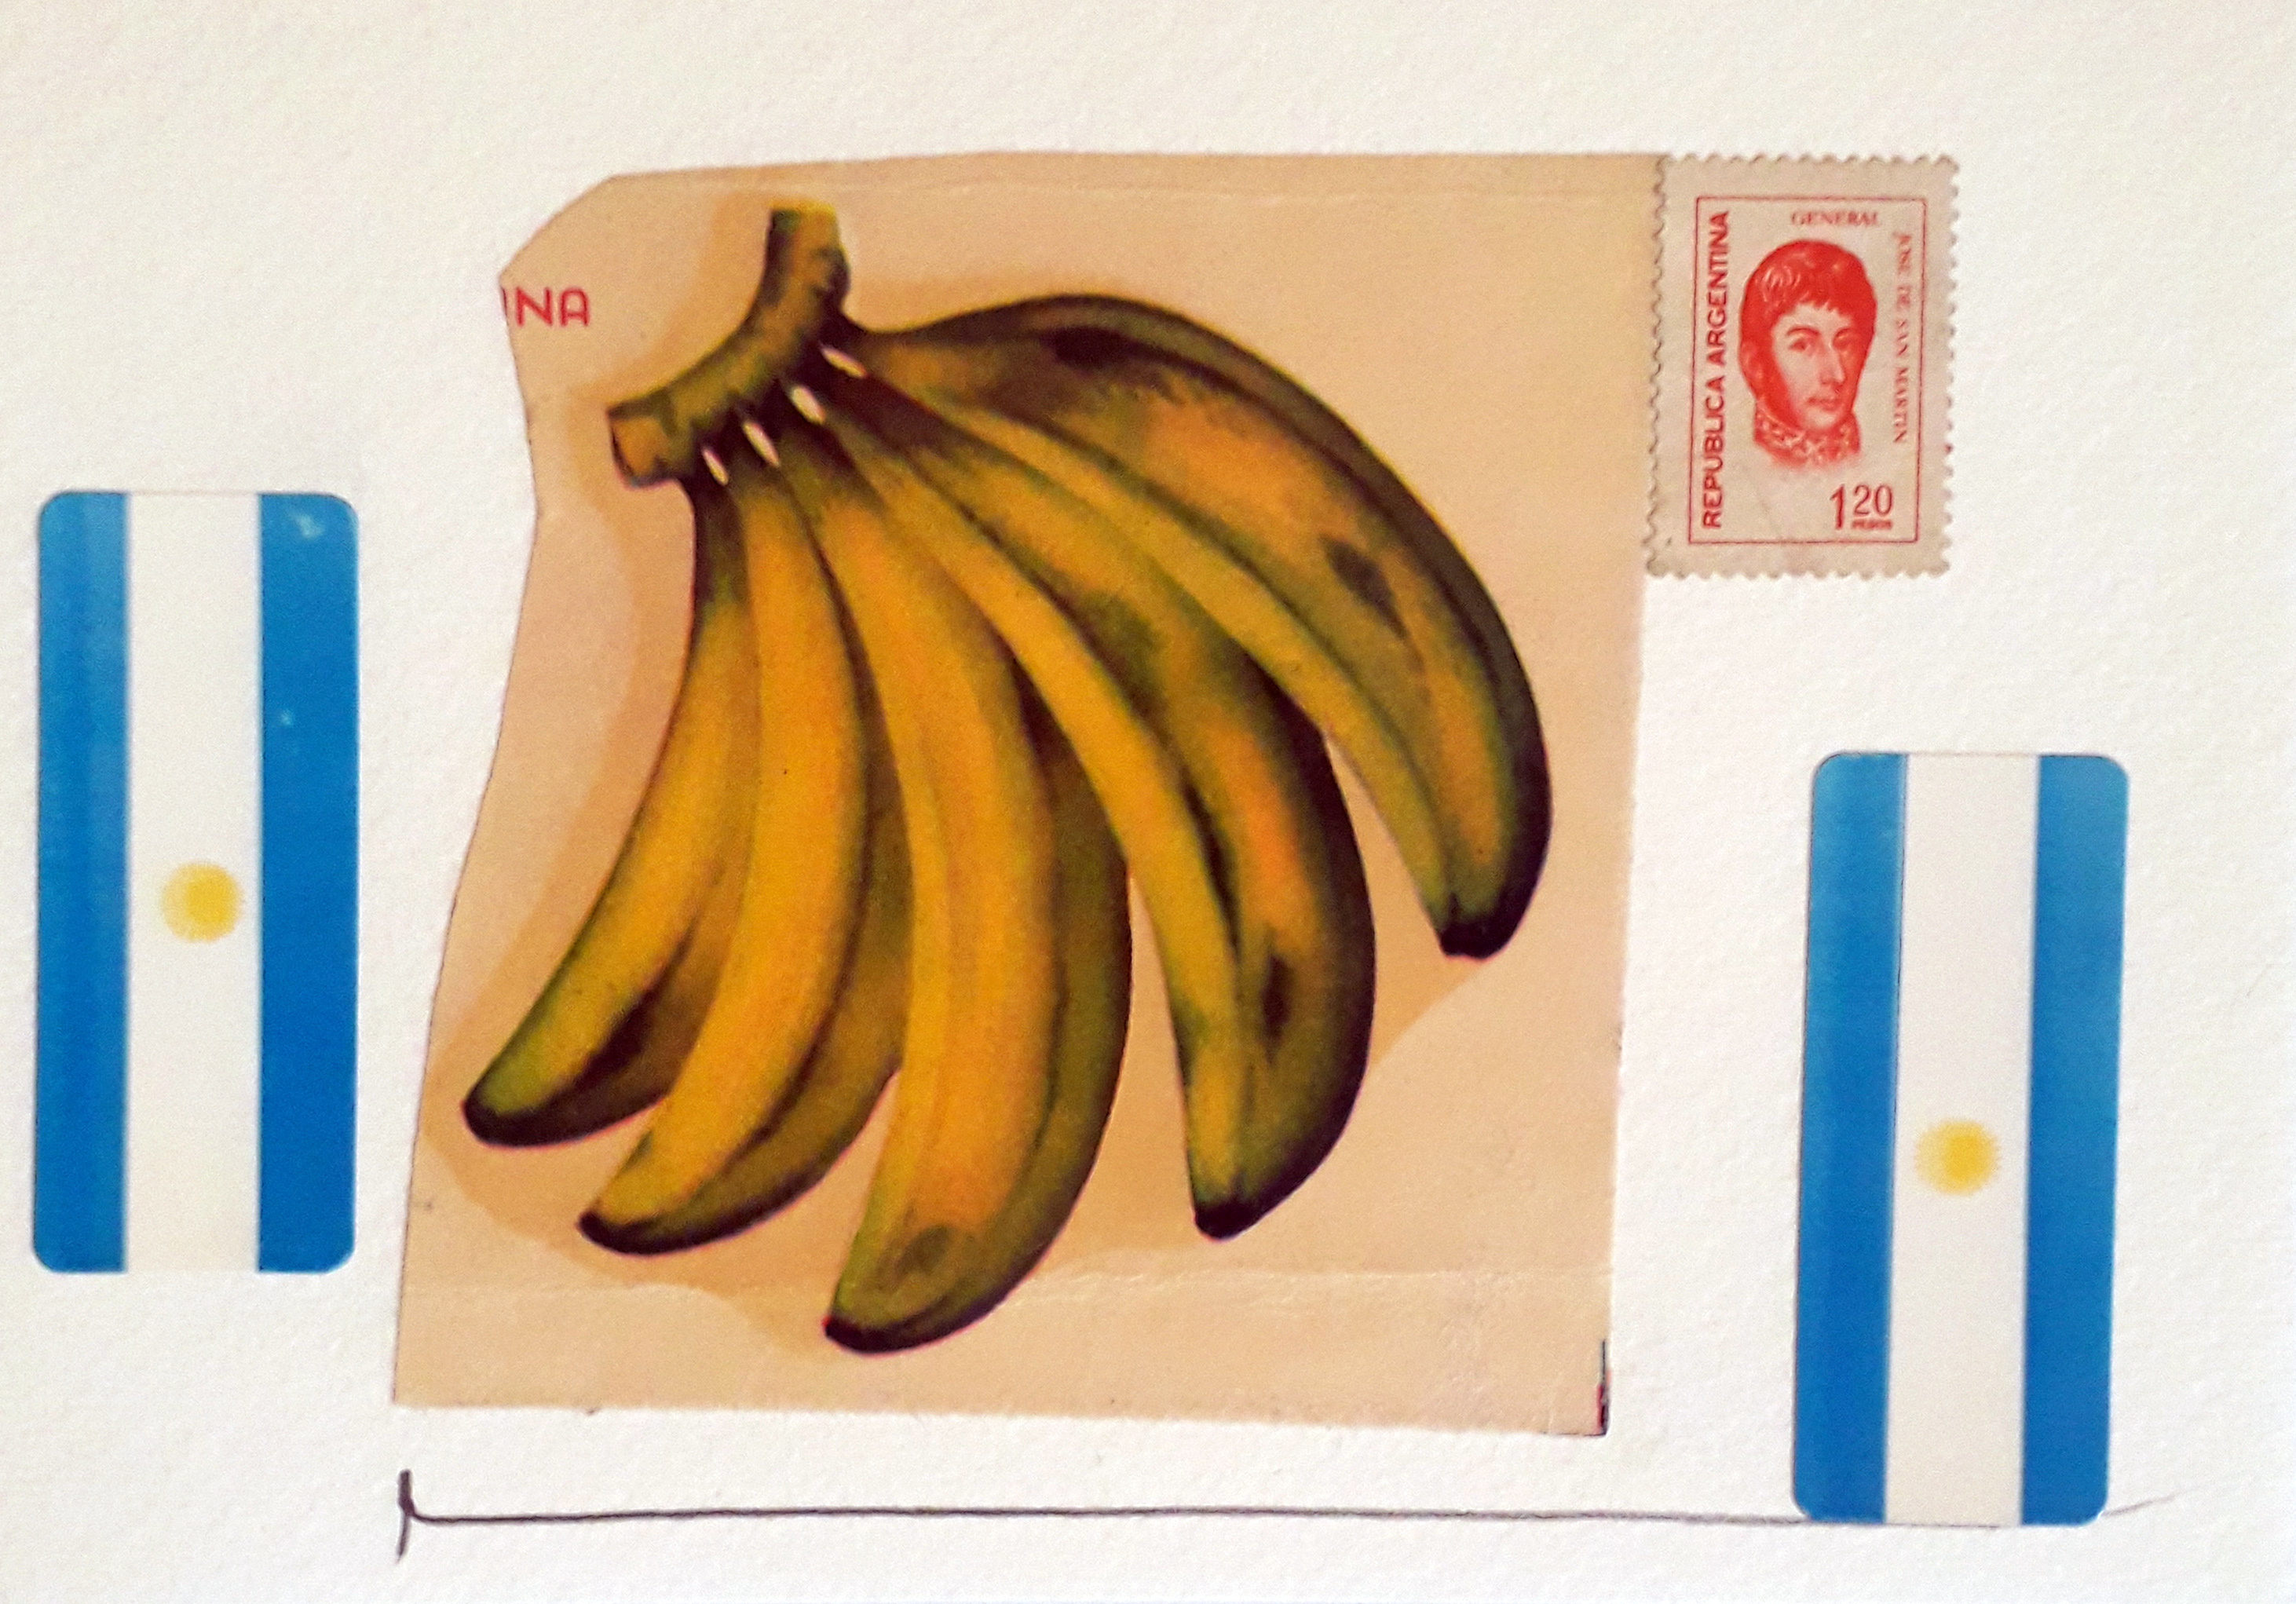 Serie pequeño formato, papel collage sobre tarjeta postal, 10 cm x 15 cm, 2020